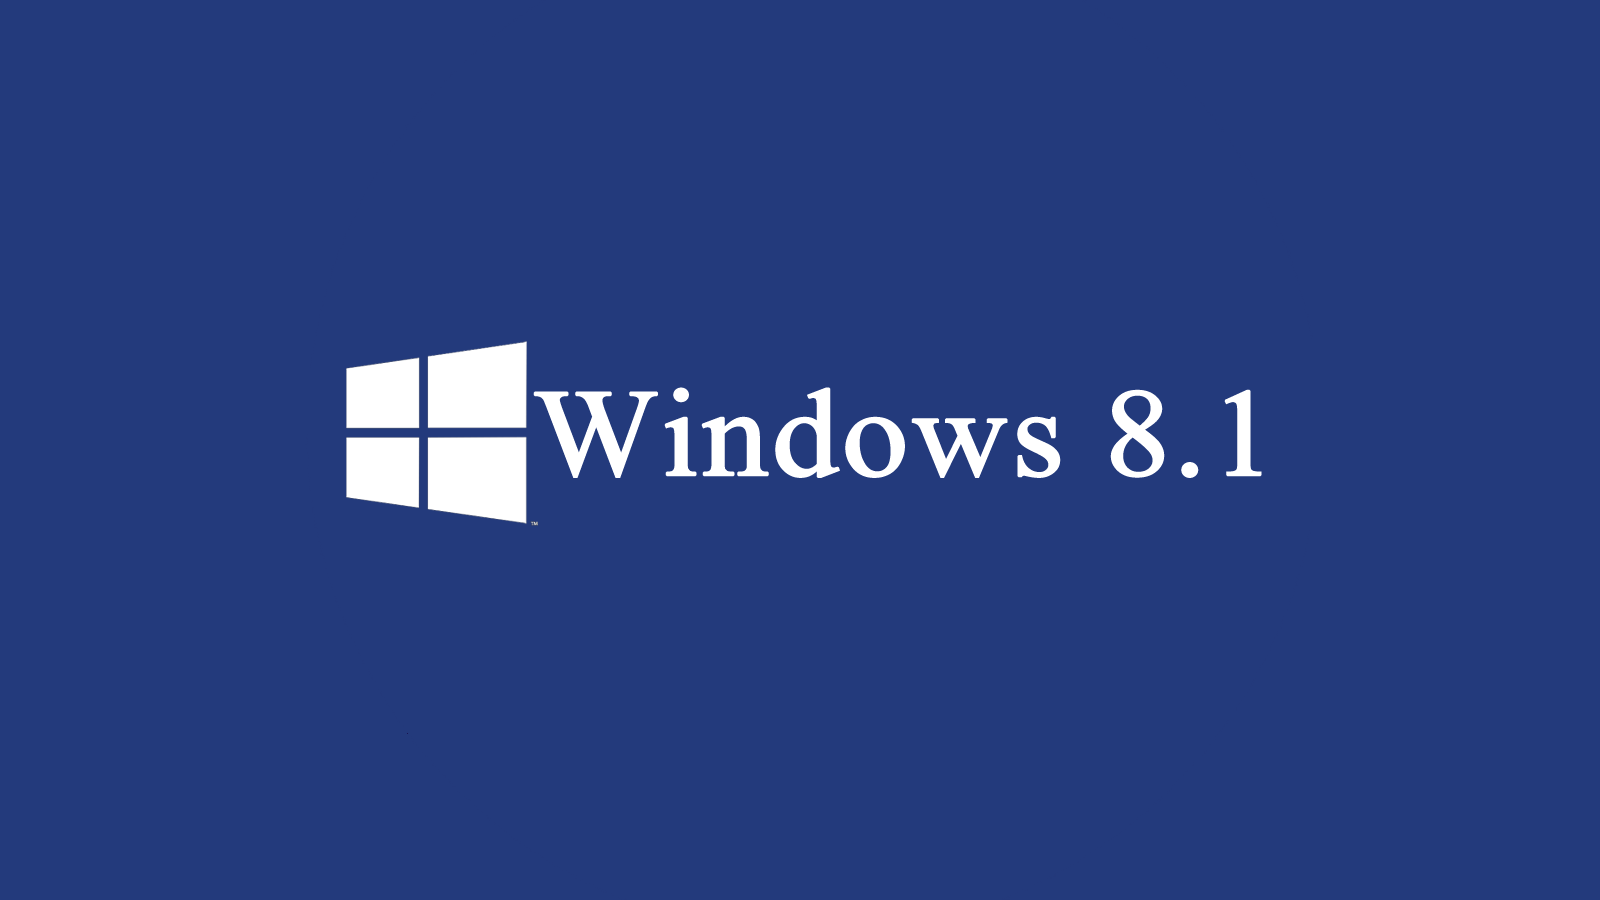 Windows 8 Lock Screen Wallpapers Free Download Windows 81 Background